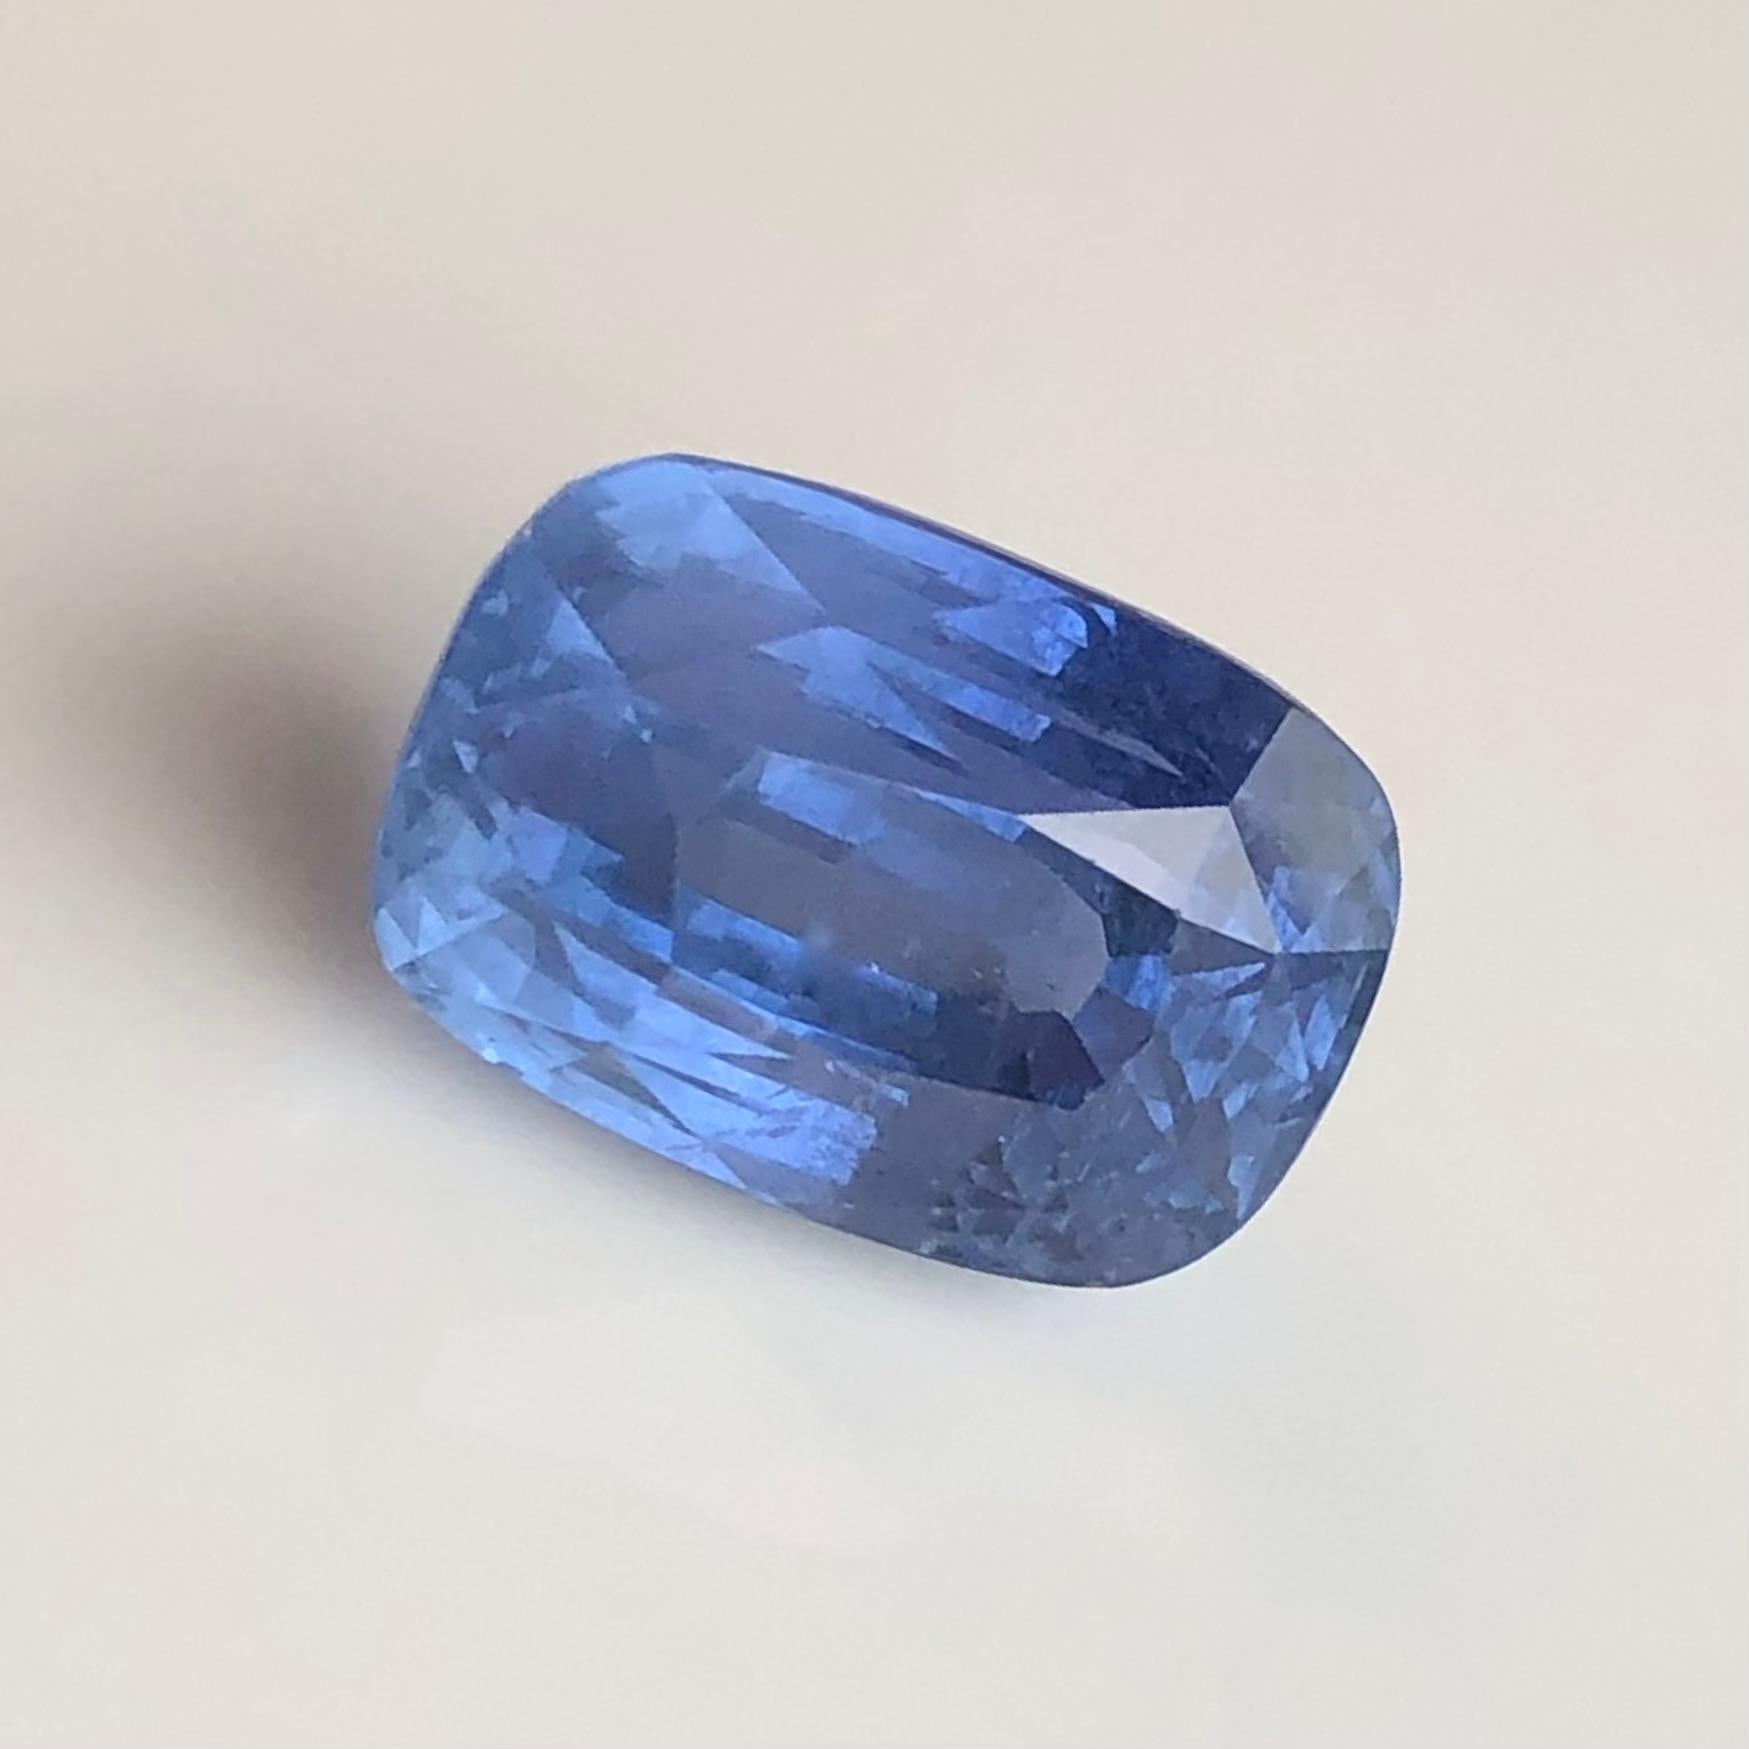 Unheated 13.12 Carat Ceylon Blue Sapphire, Loose Gemstone, Certified
Certified 13.12 Carats Blue Sapphire from Sri Lanka (Ceylon) 
Gemstone:	Natural Sapphire
Carat Weight:	13.12 Carats
Measurements:  13.88 x 9.51 x 9.37mm 	
Shape: Antique Cushion